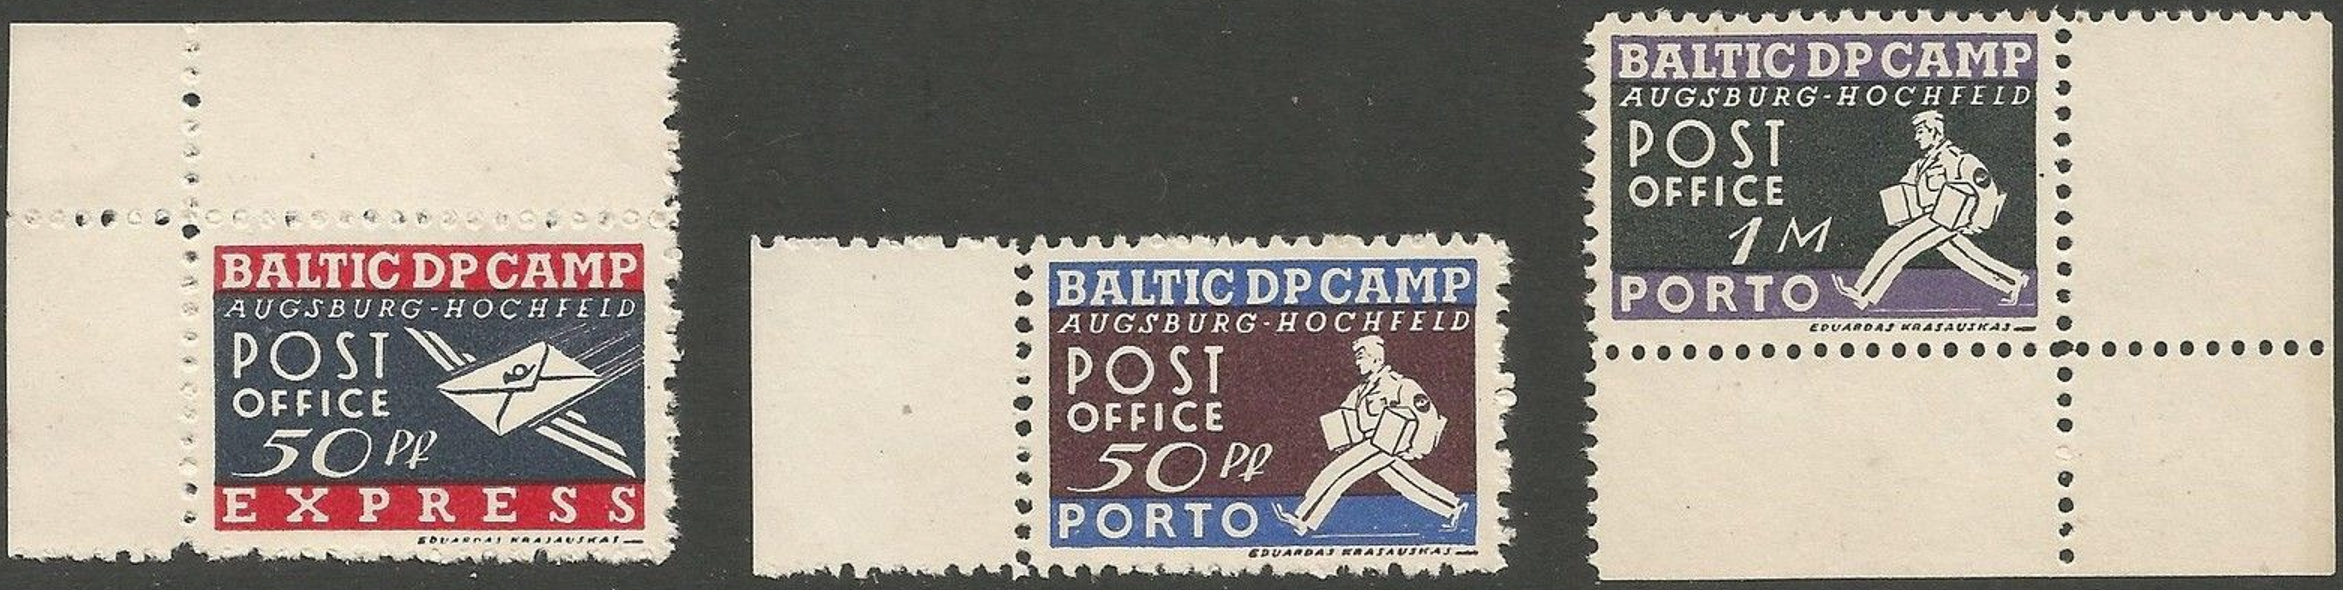 camp post stamp Augsburg-Hochfeld